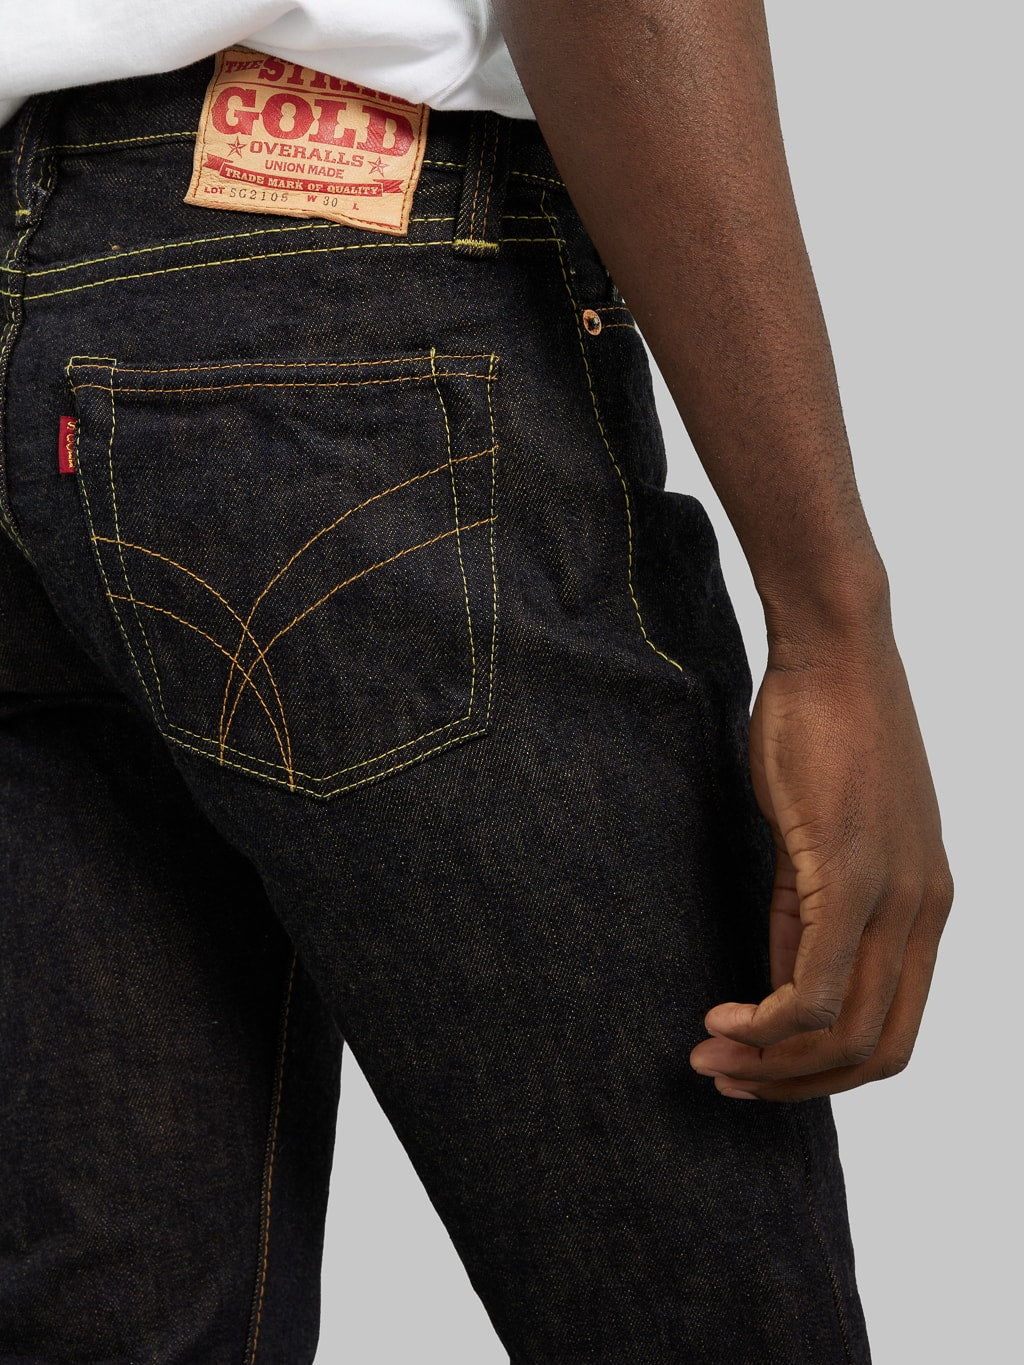 The Strike Gold Brown Weft Slim Jeans pocket stitching